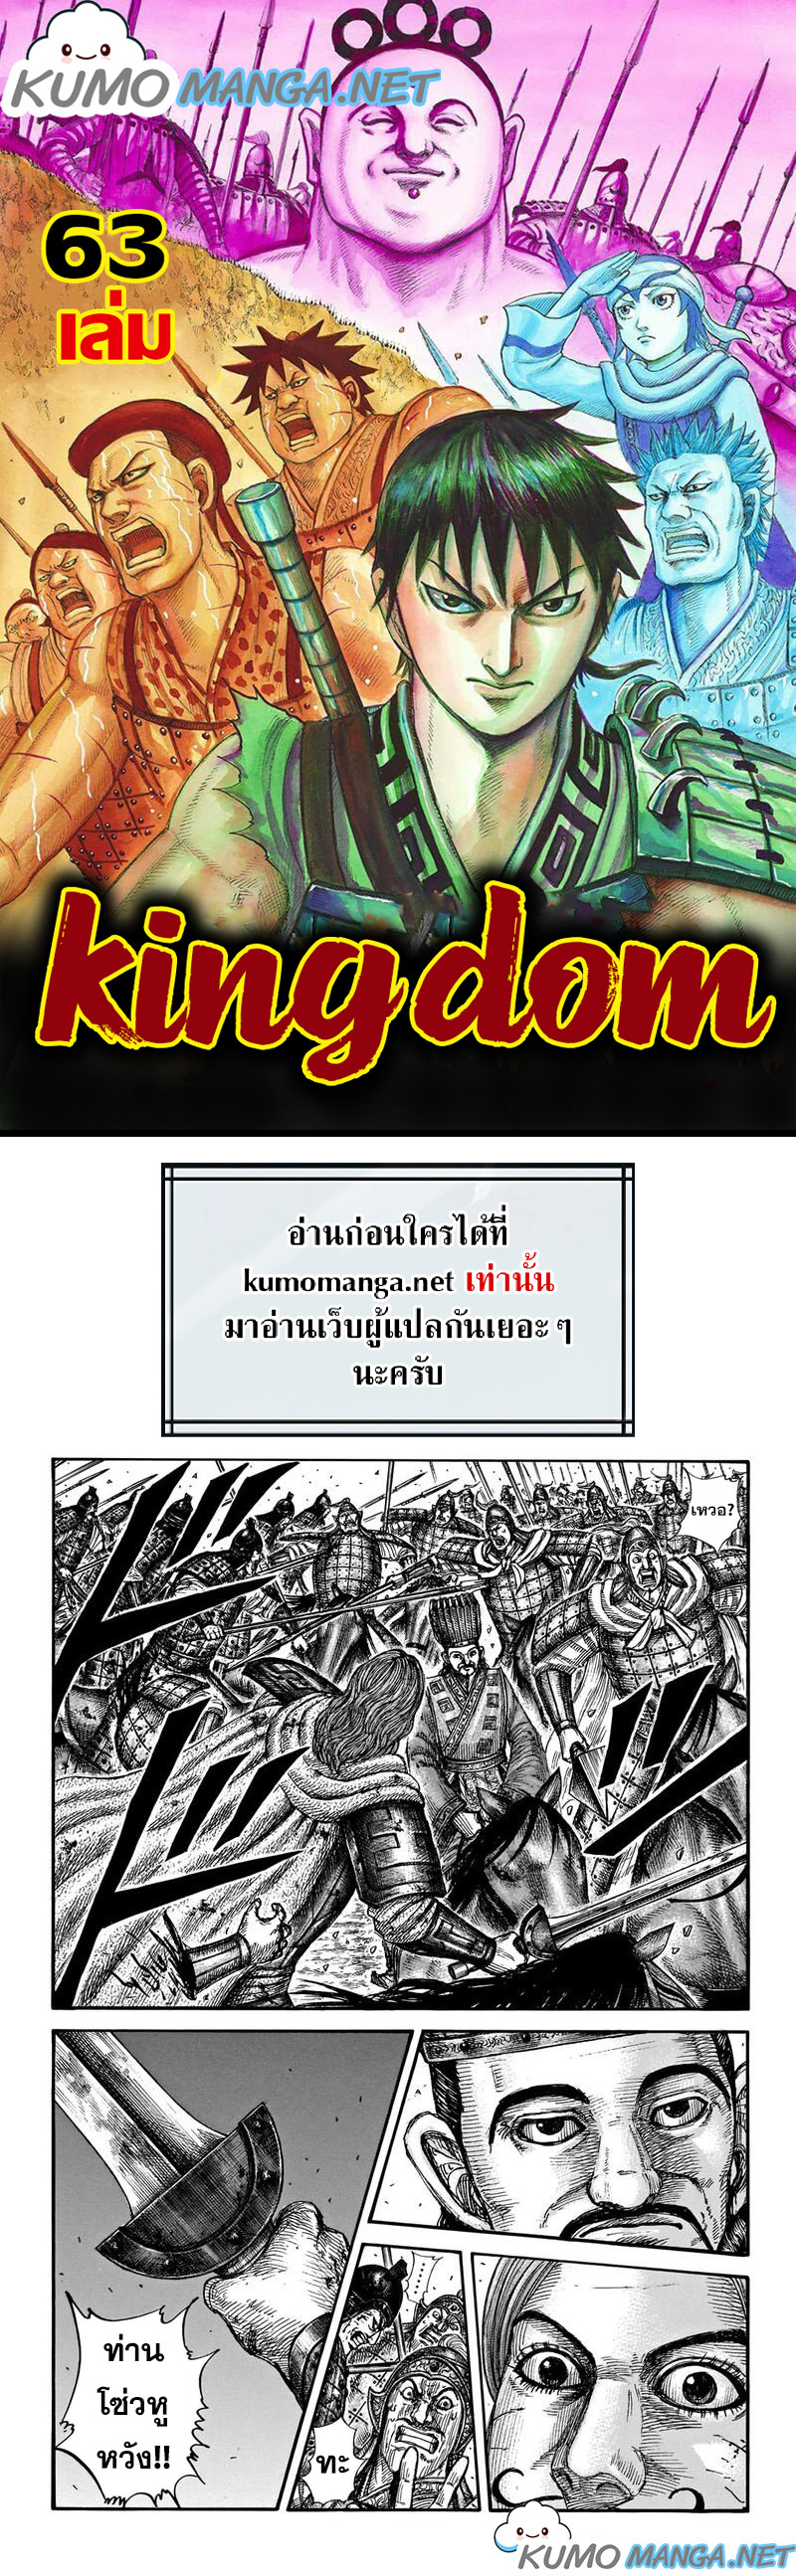 Kingdom 659 (1)